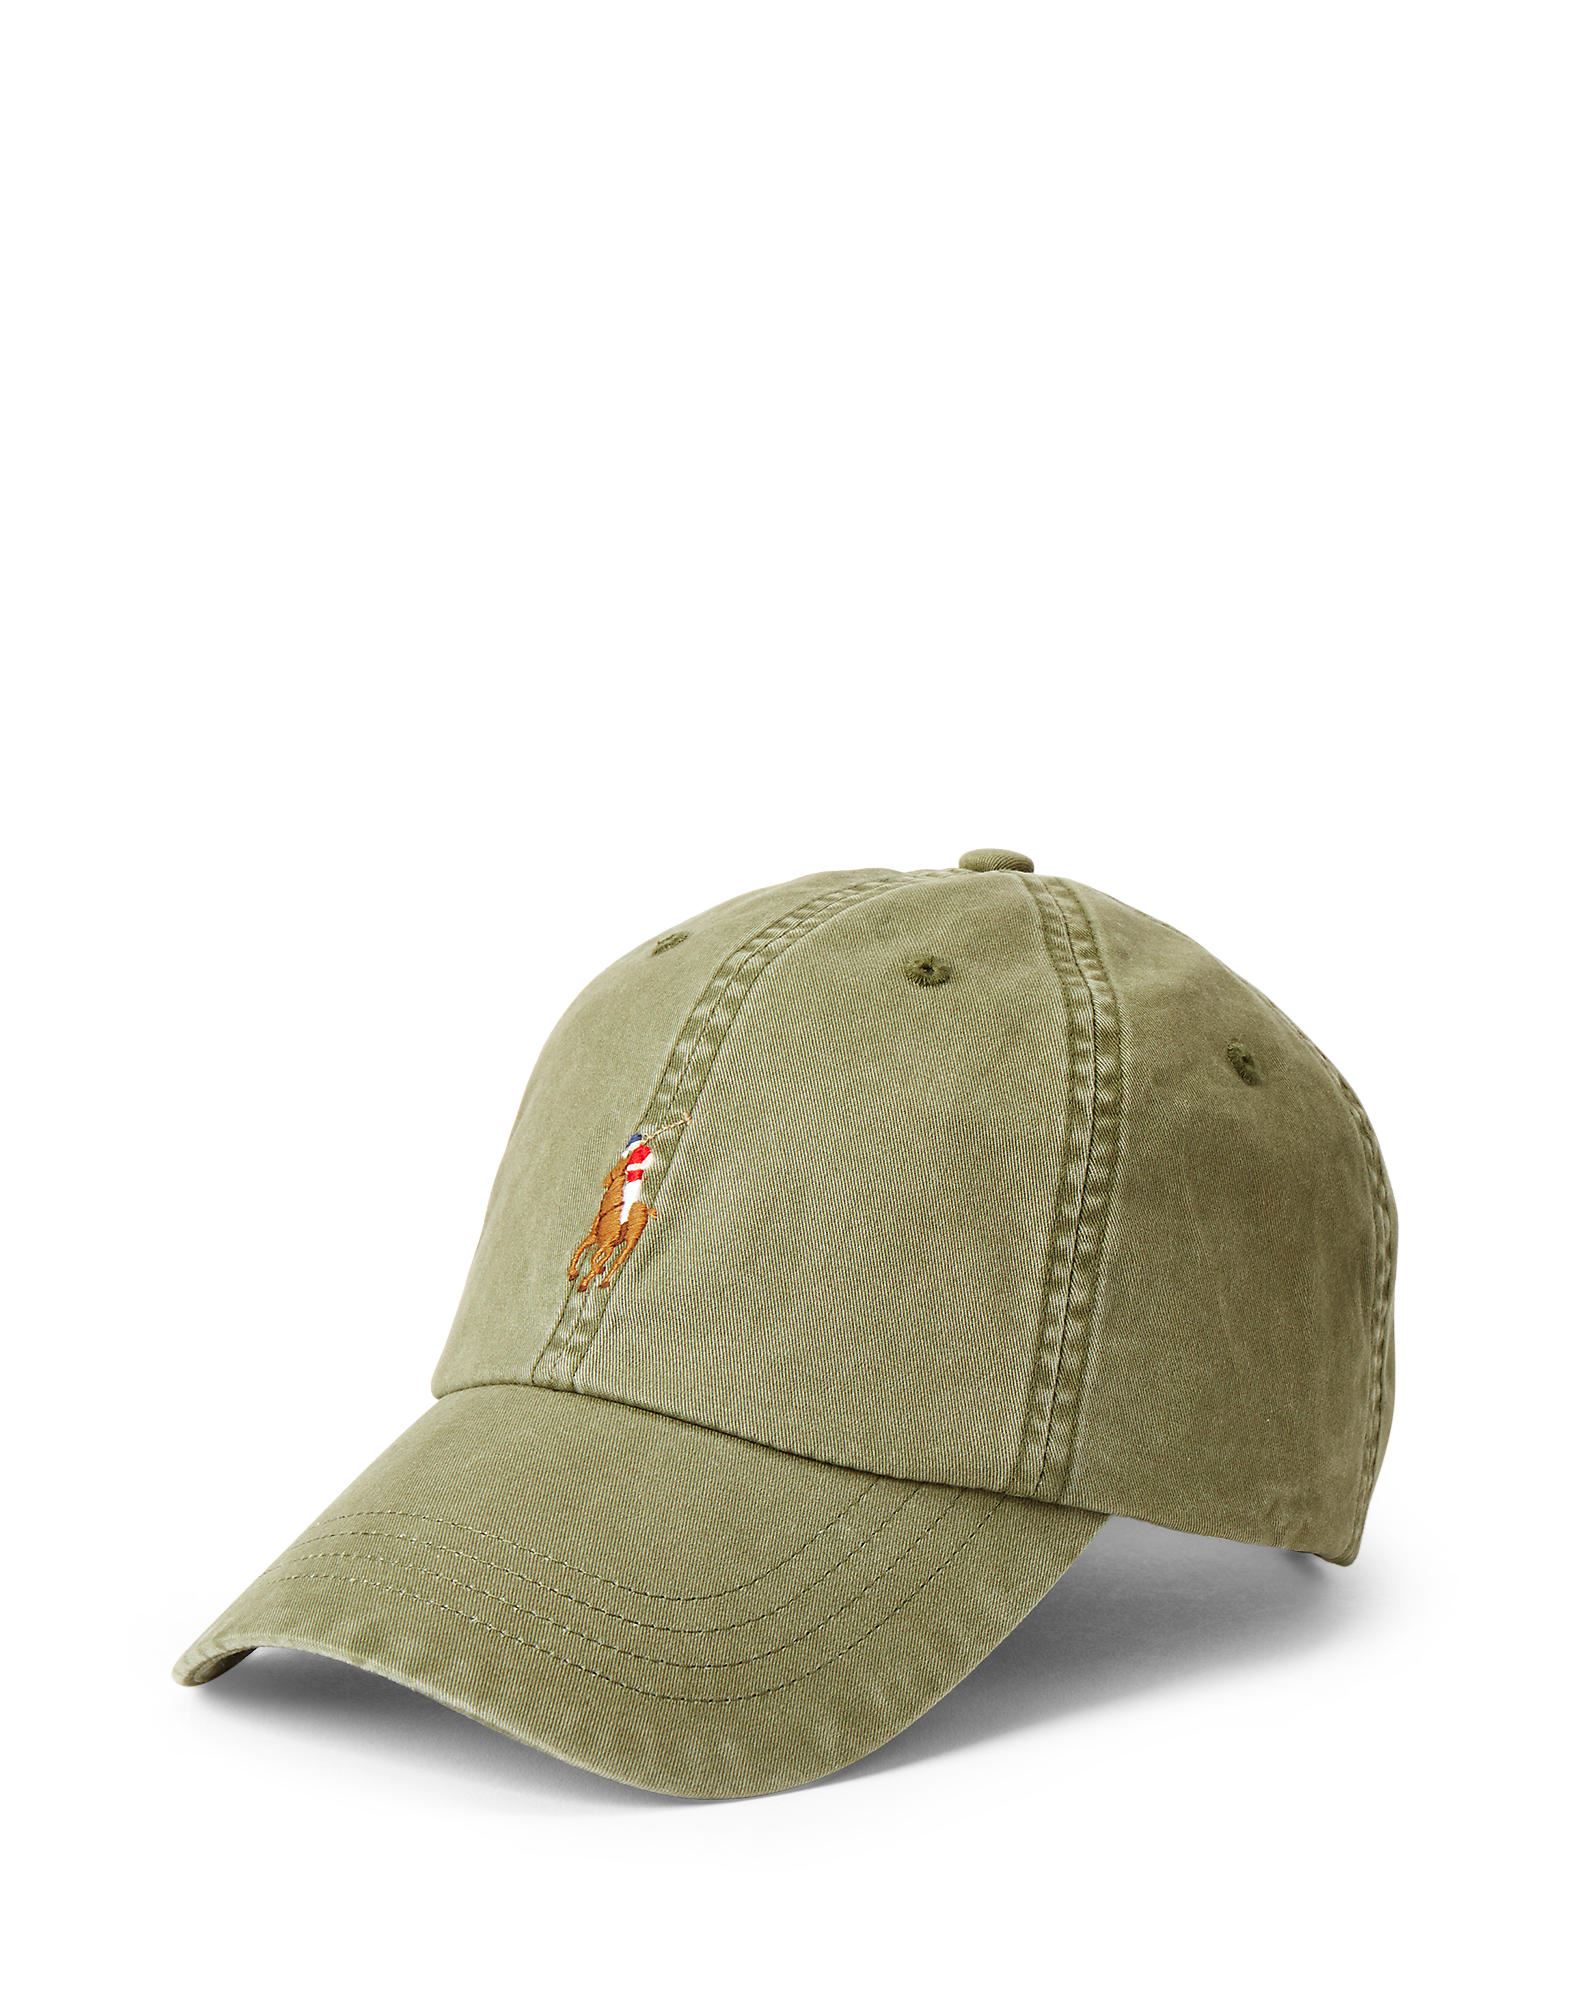 Polo Ralph Lauren Hats In Military Green